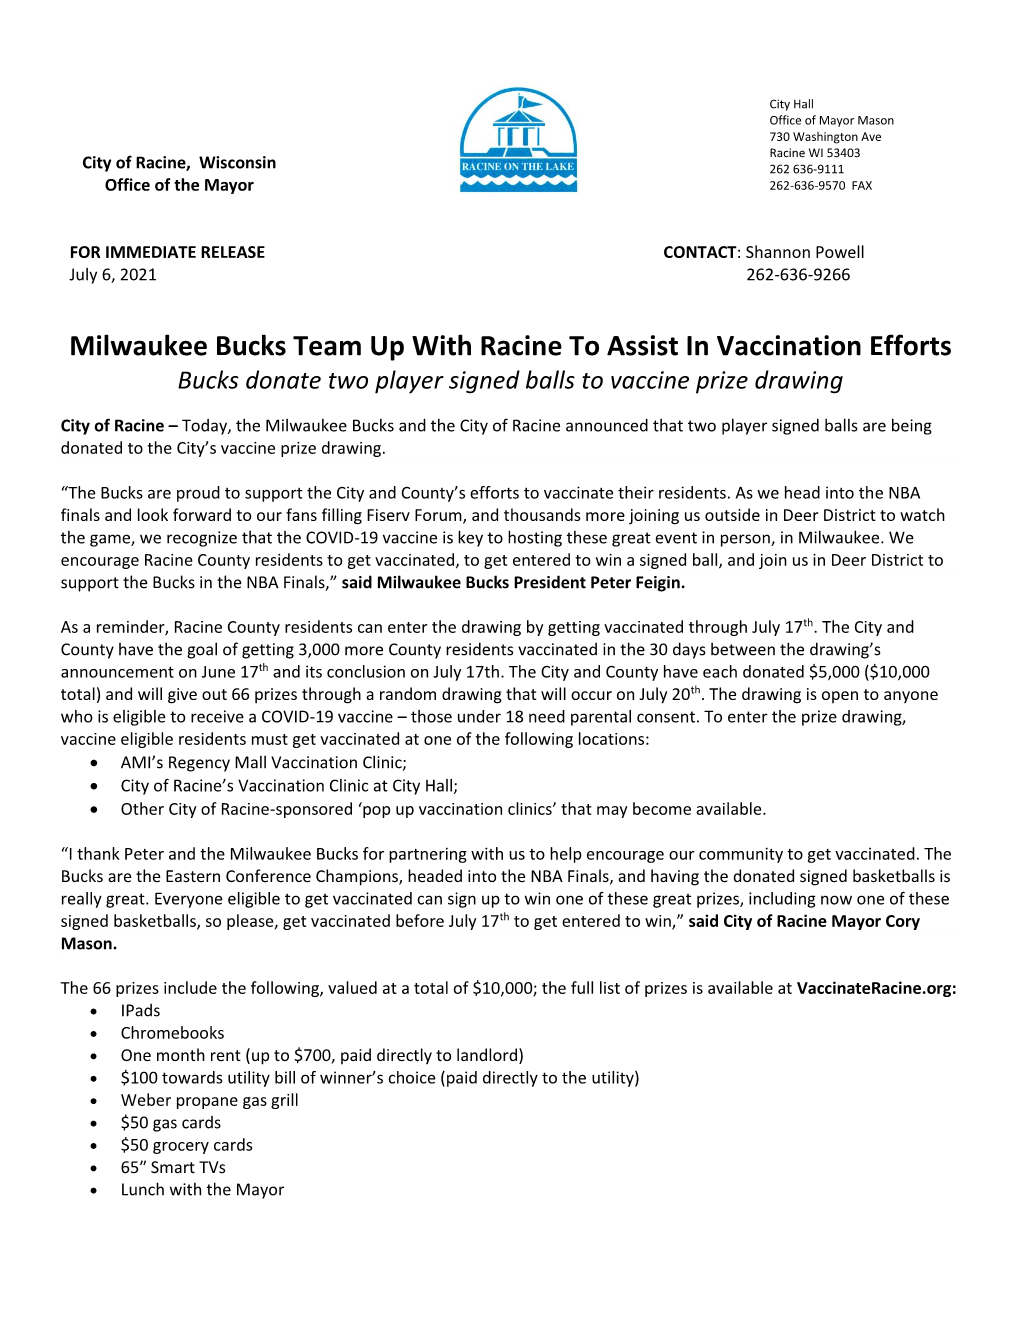 City of Racine: Milwaukee Bucks to Assist in Vaccination Efforts